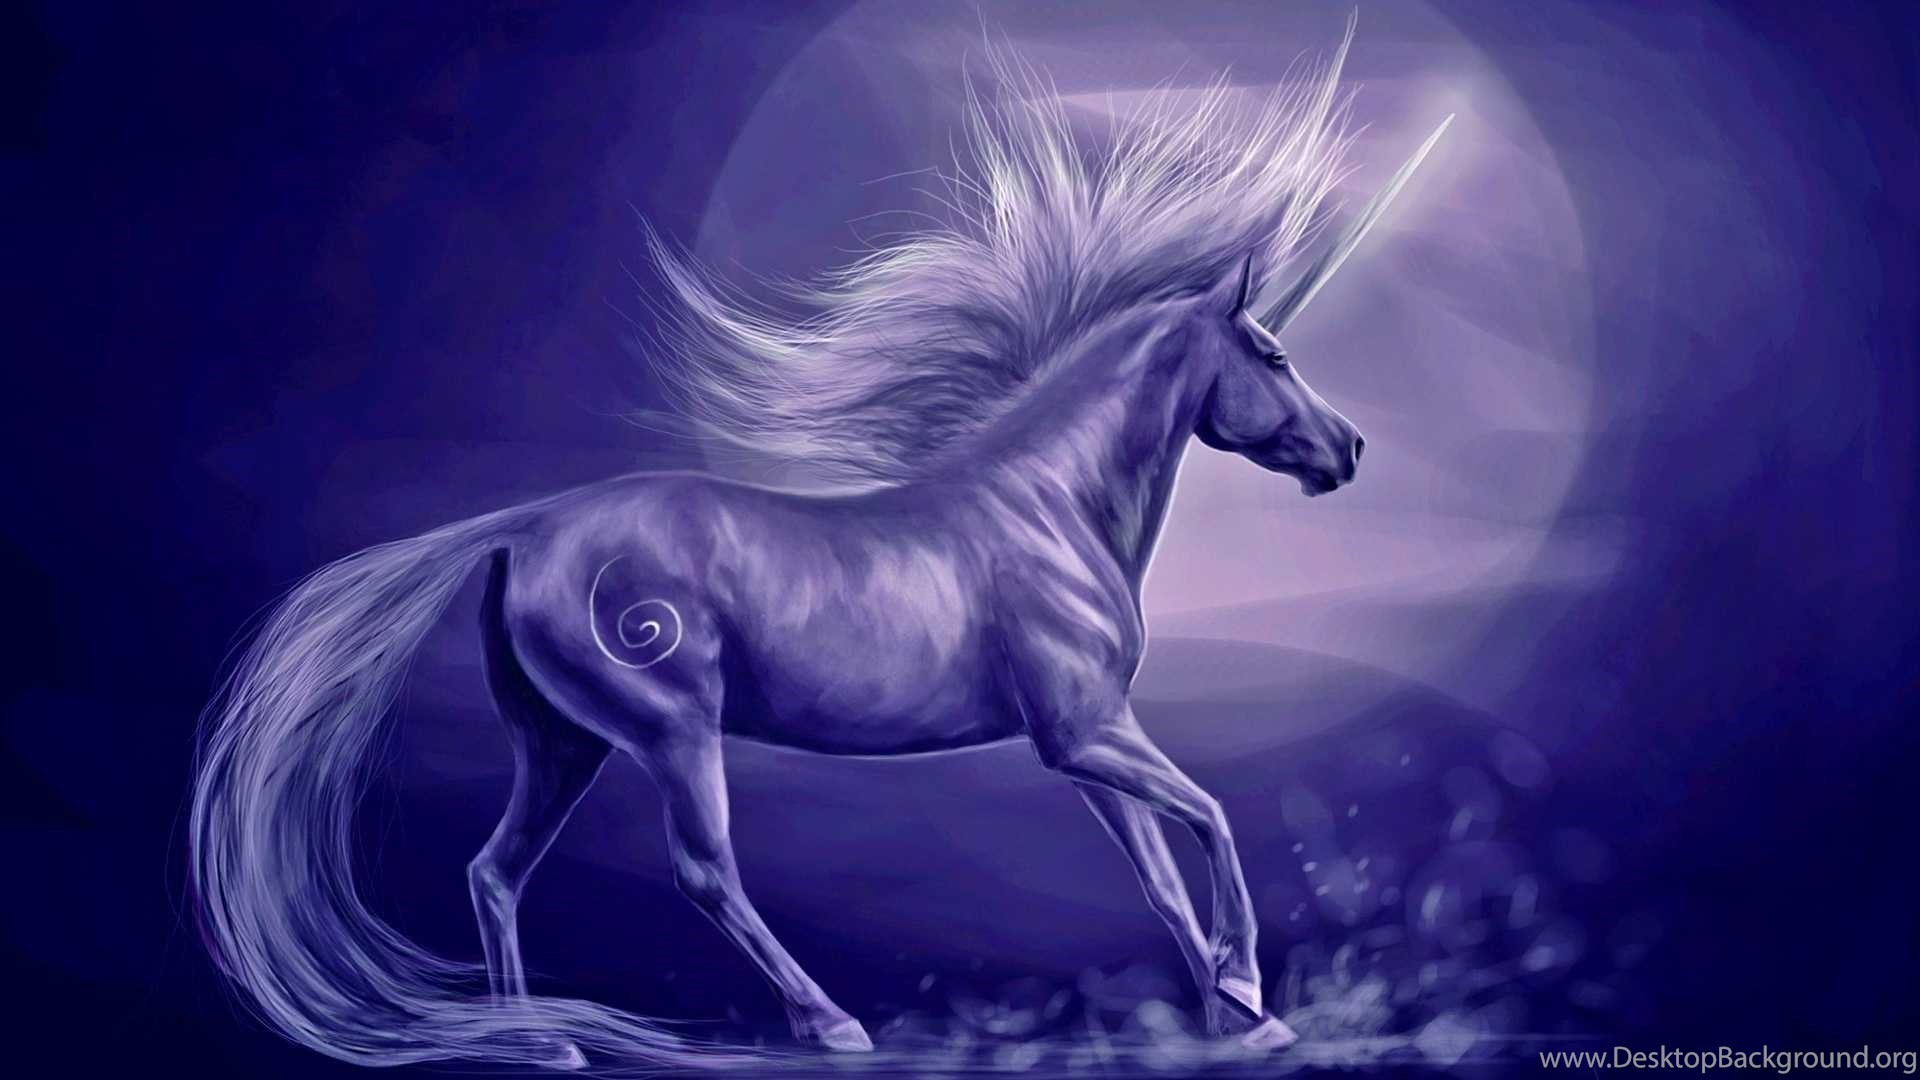 Wallpaper White and Purple Unicorn Illustration Background  Download Free  Image